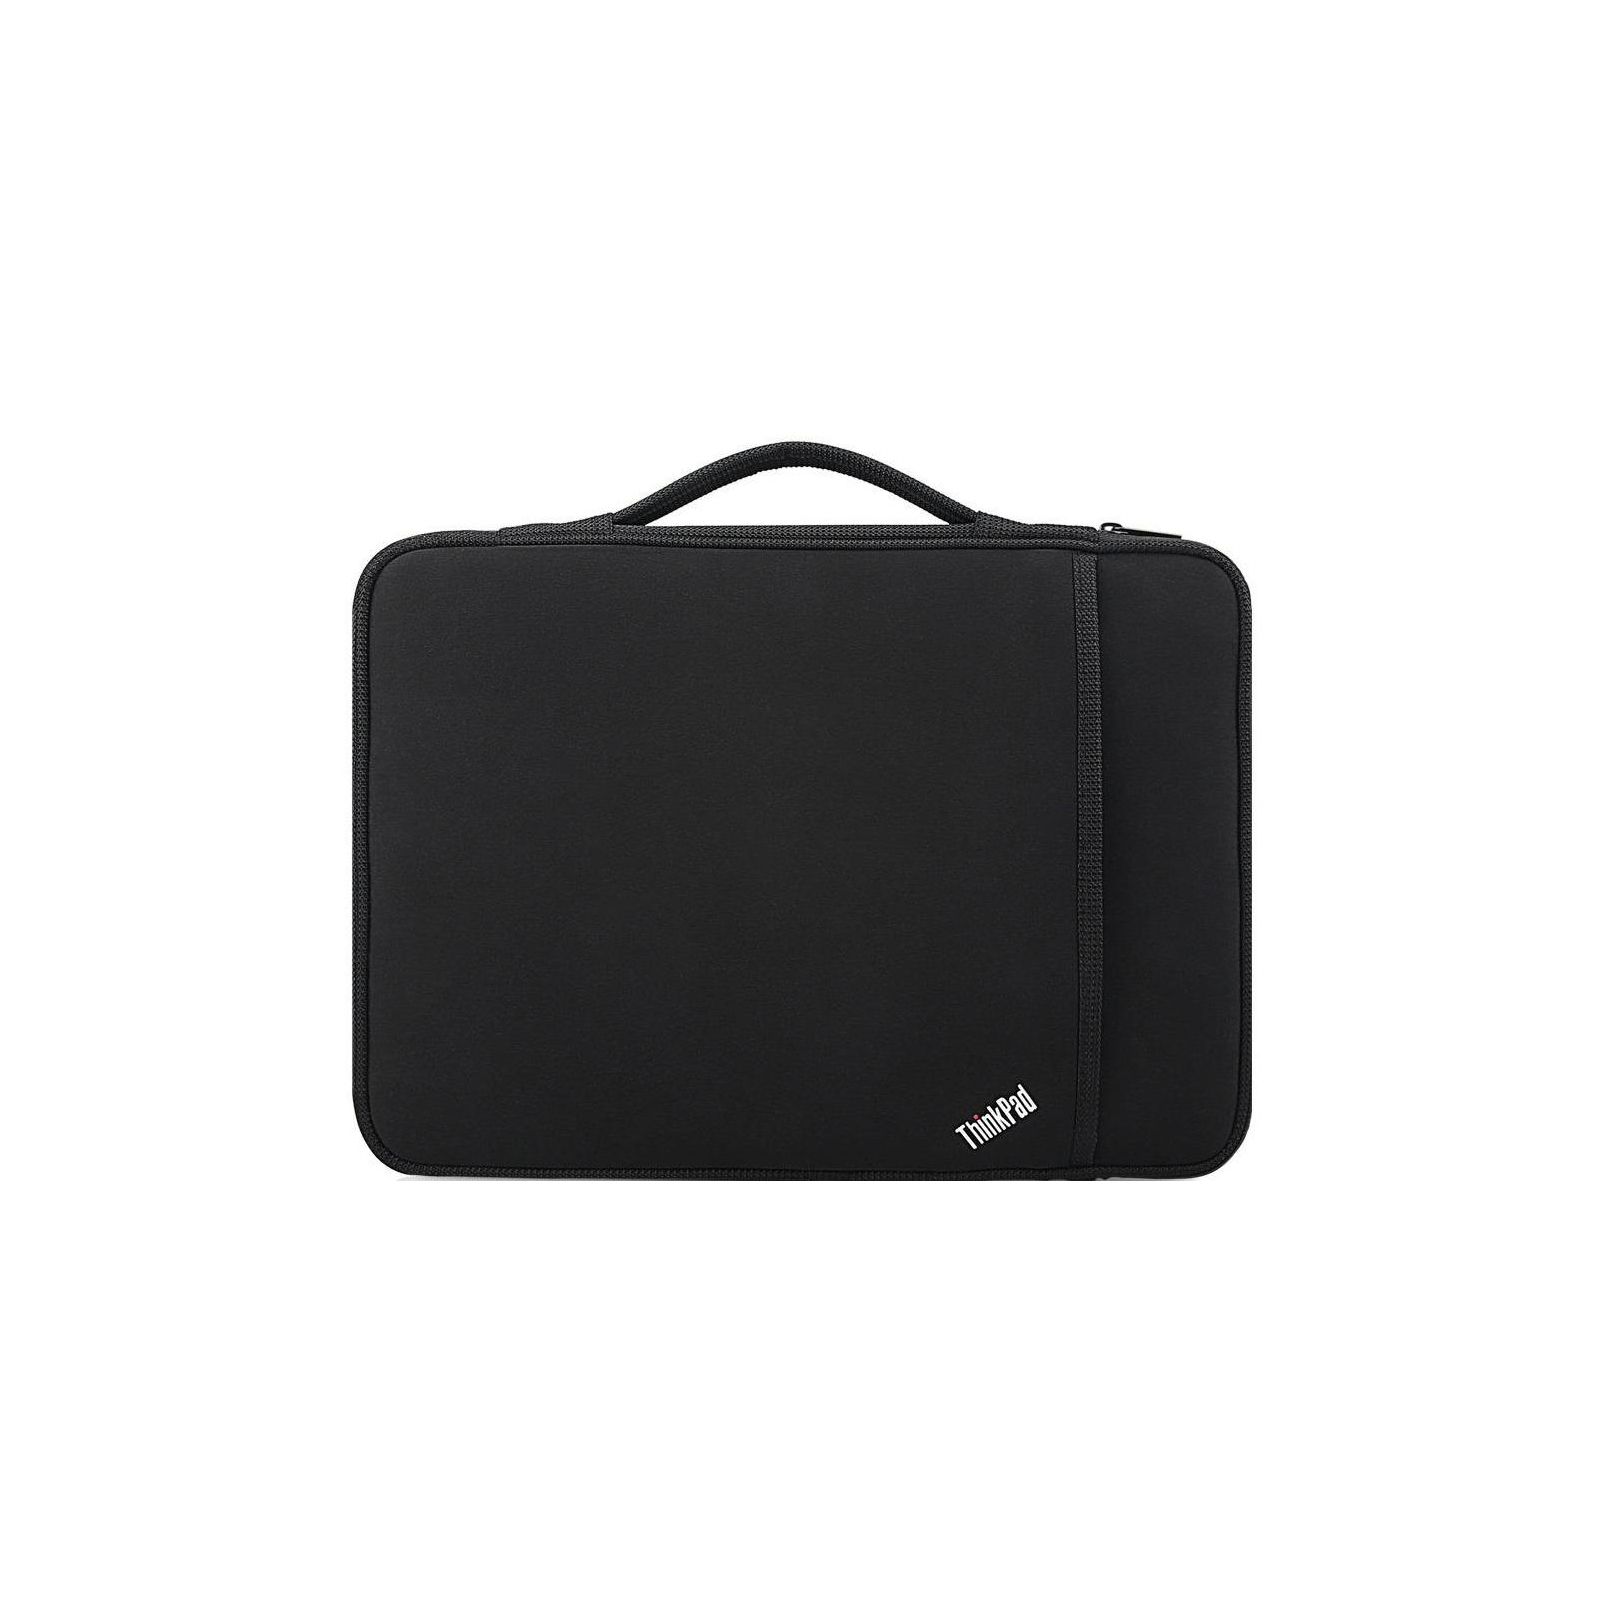 Чехол для ноутбука Lenovo 15" ThinkPad, Black (4X40N18010) изображение 2